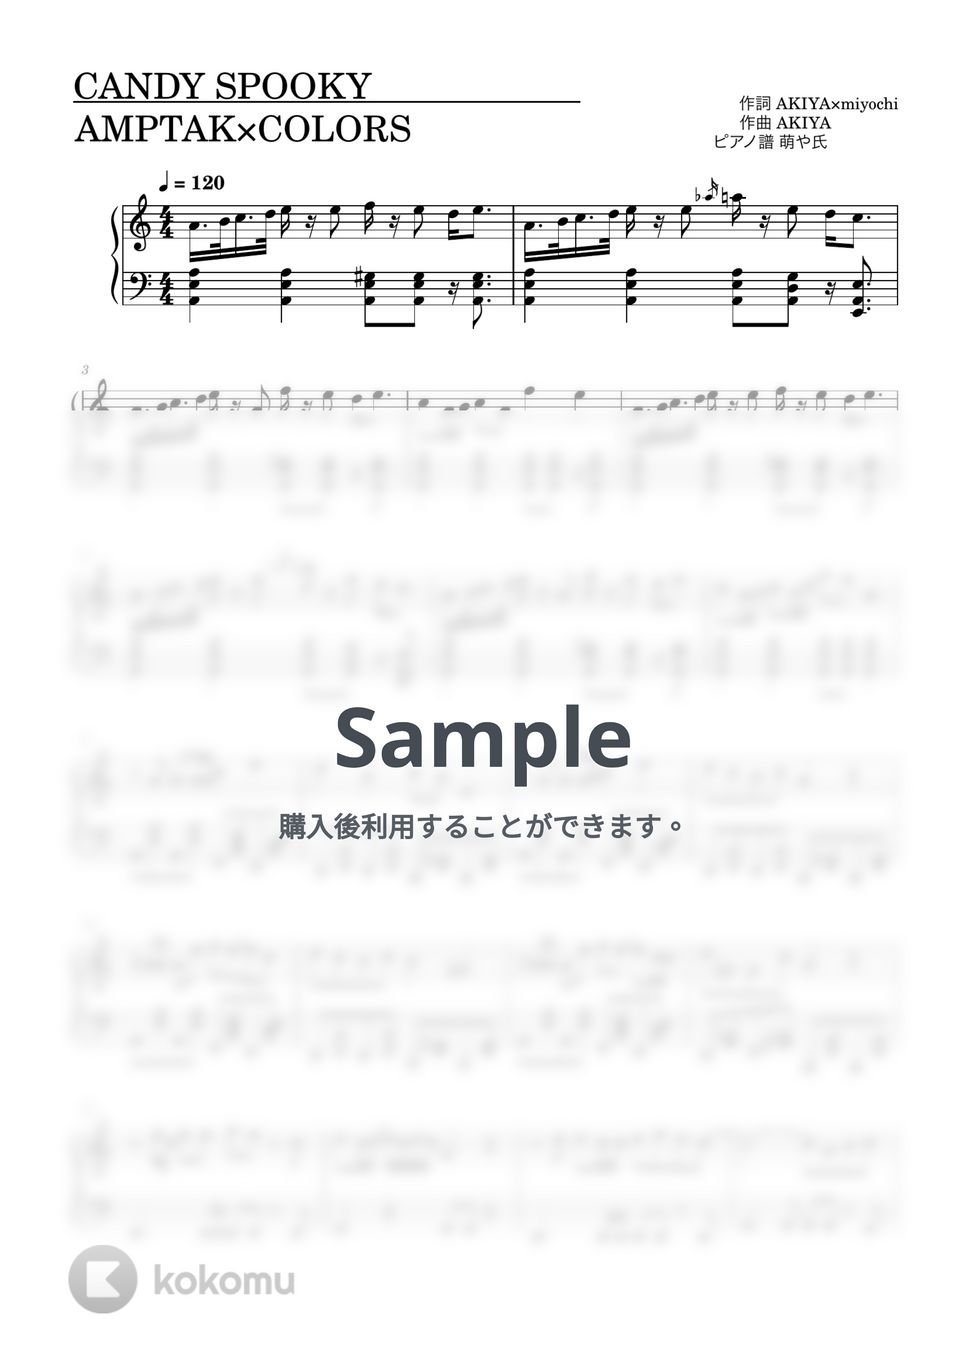 AMPTAK×COLORS - CANDY SPOOKY (ピアノソロ譜) by 萌や氏